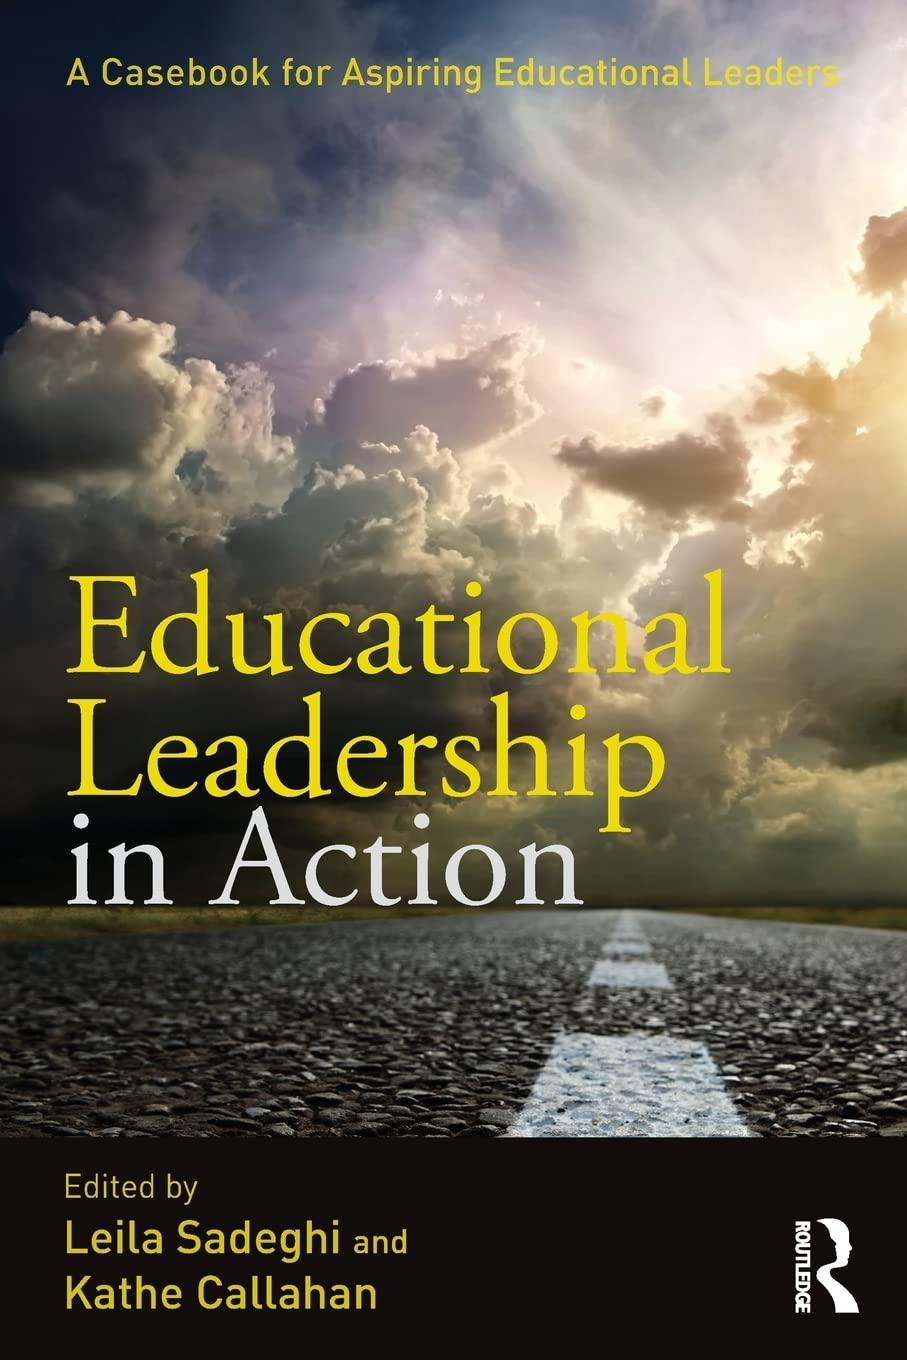 educational leadership in action a casebook for aspiring educational leaders 1st edition leila sadeghi, kathe